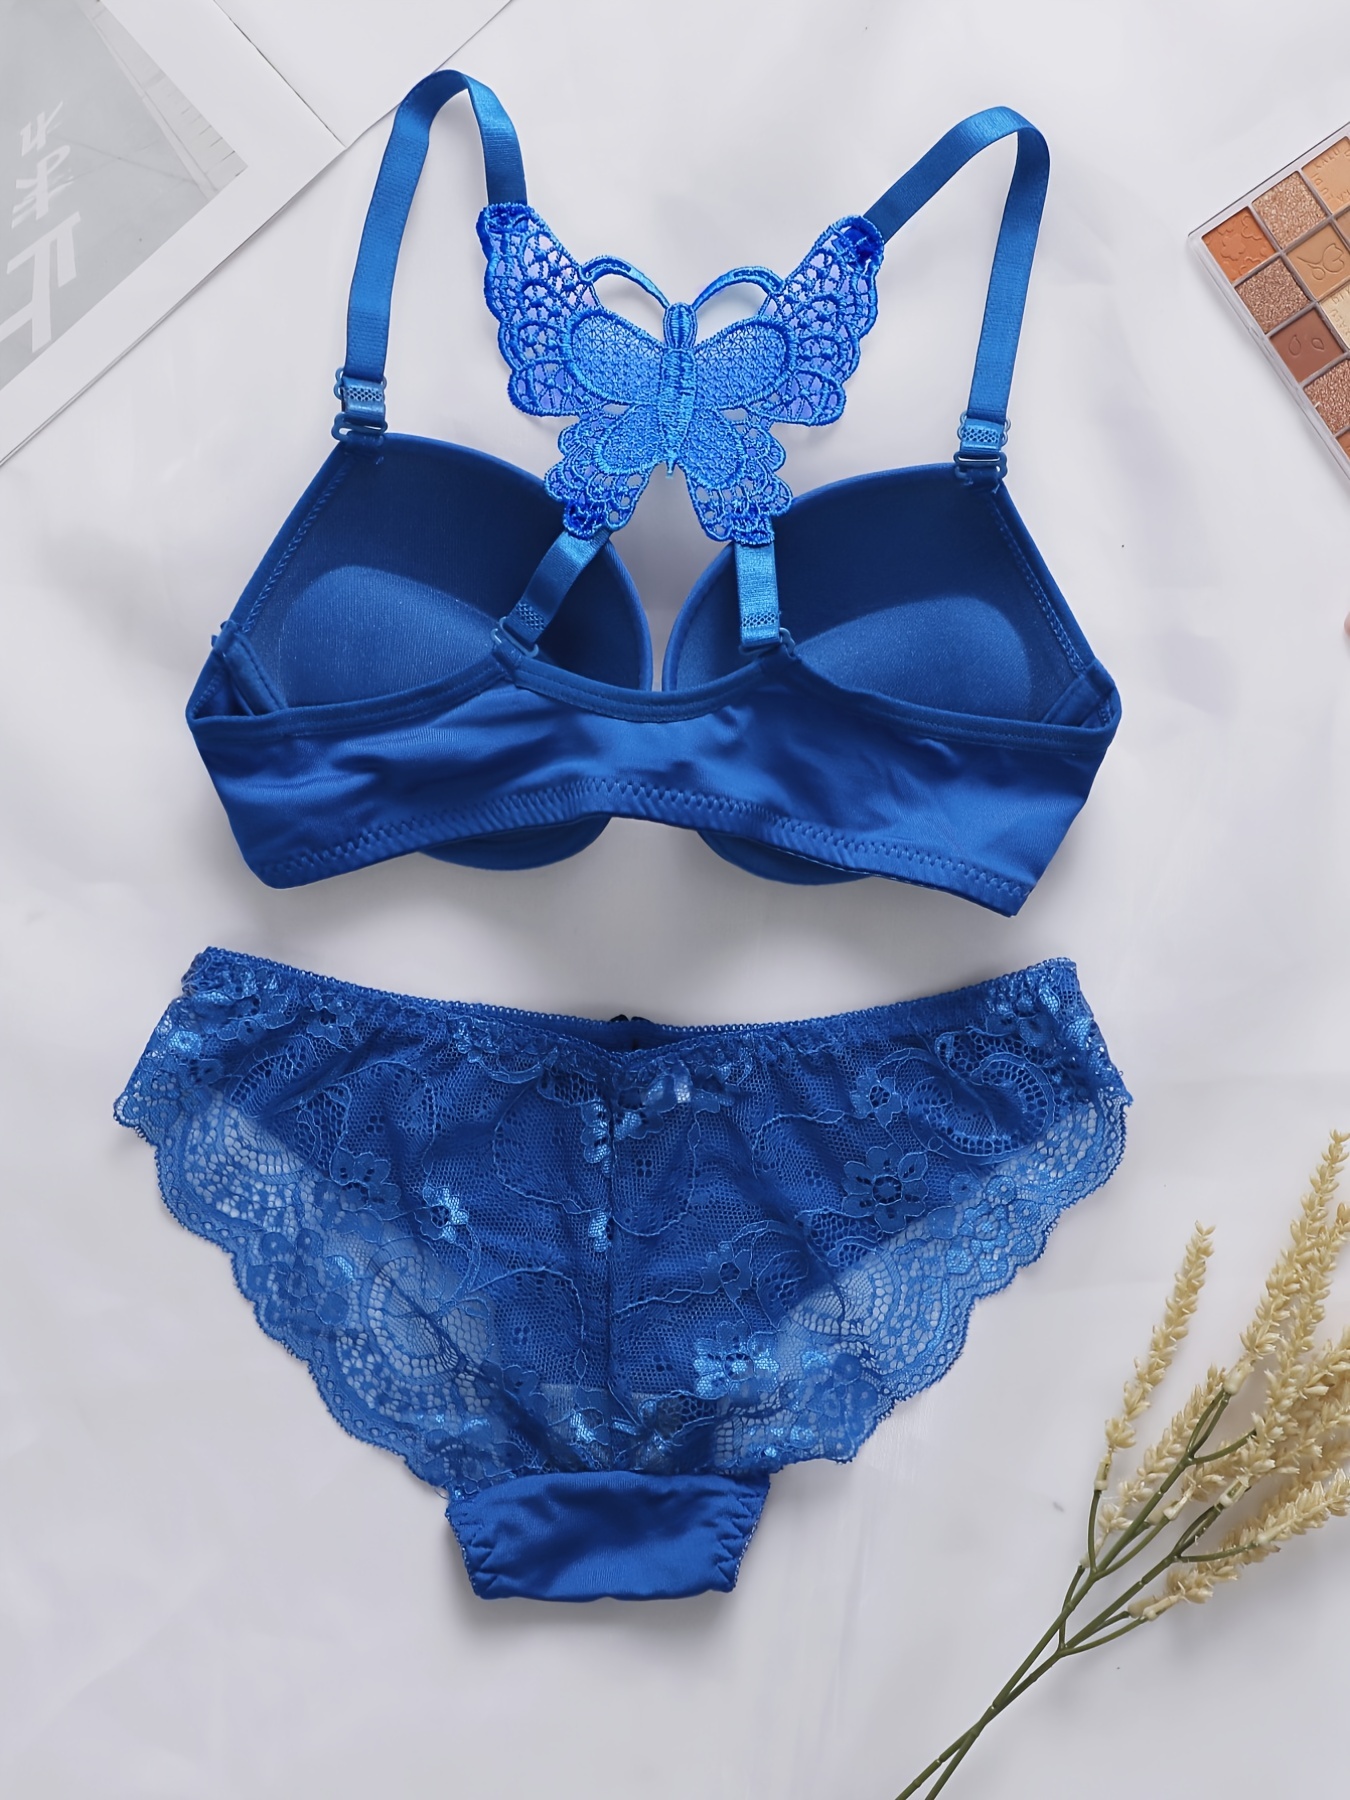 Blue/Cream lace underwire push-up Bra/Panty set- satin bow detail